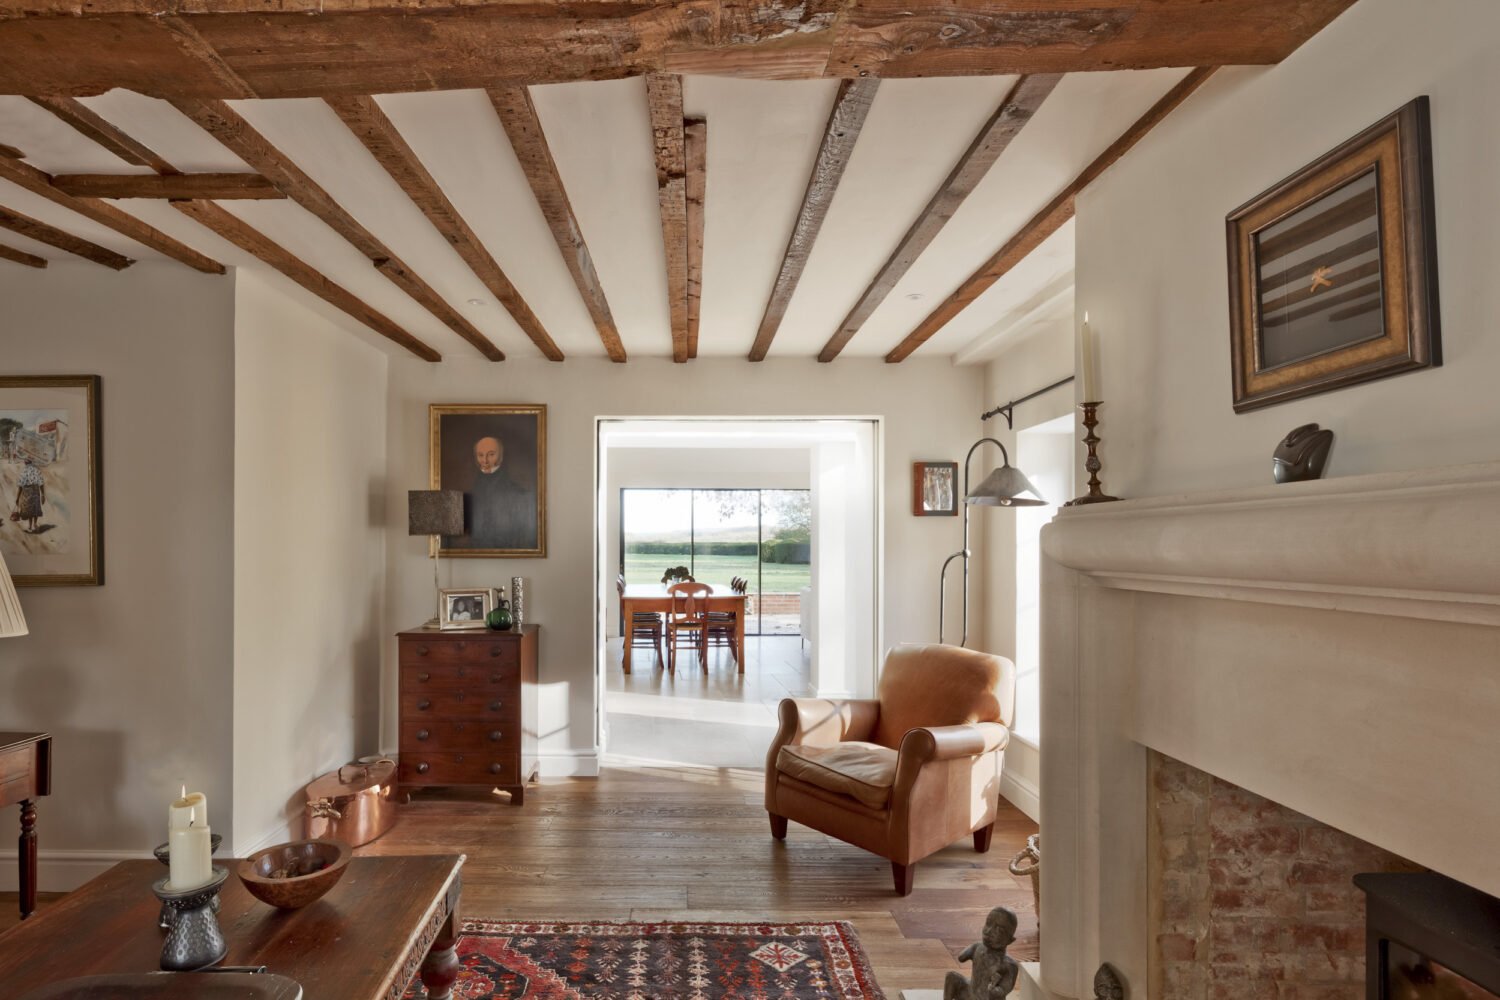 Rustic Living Room Design Exposed Timber Beams 1500x1000 